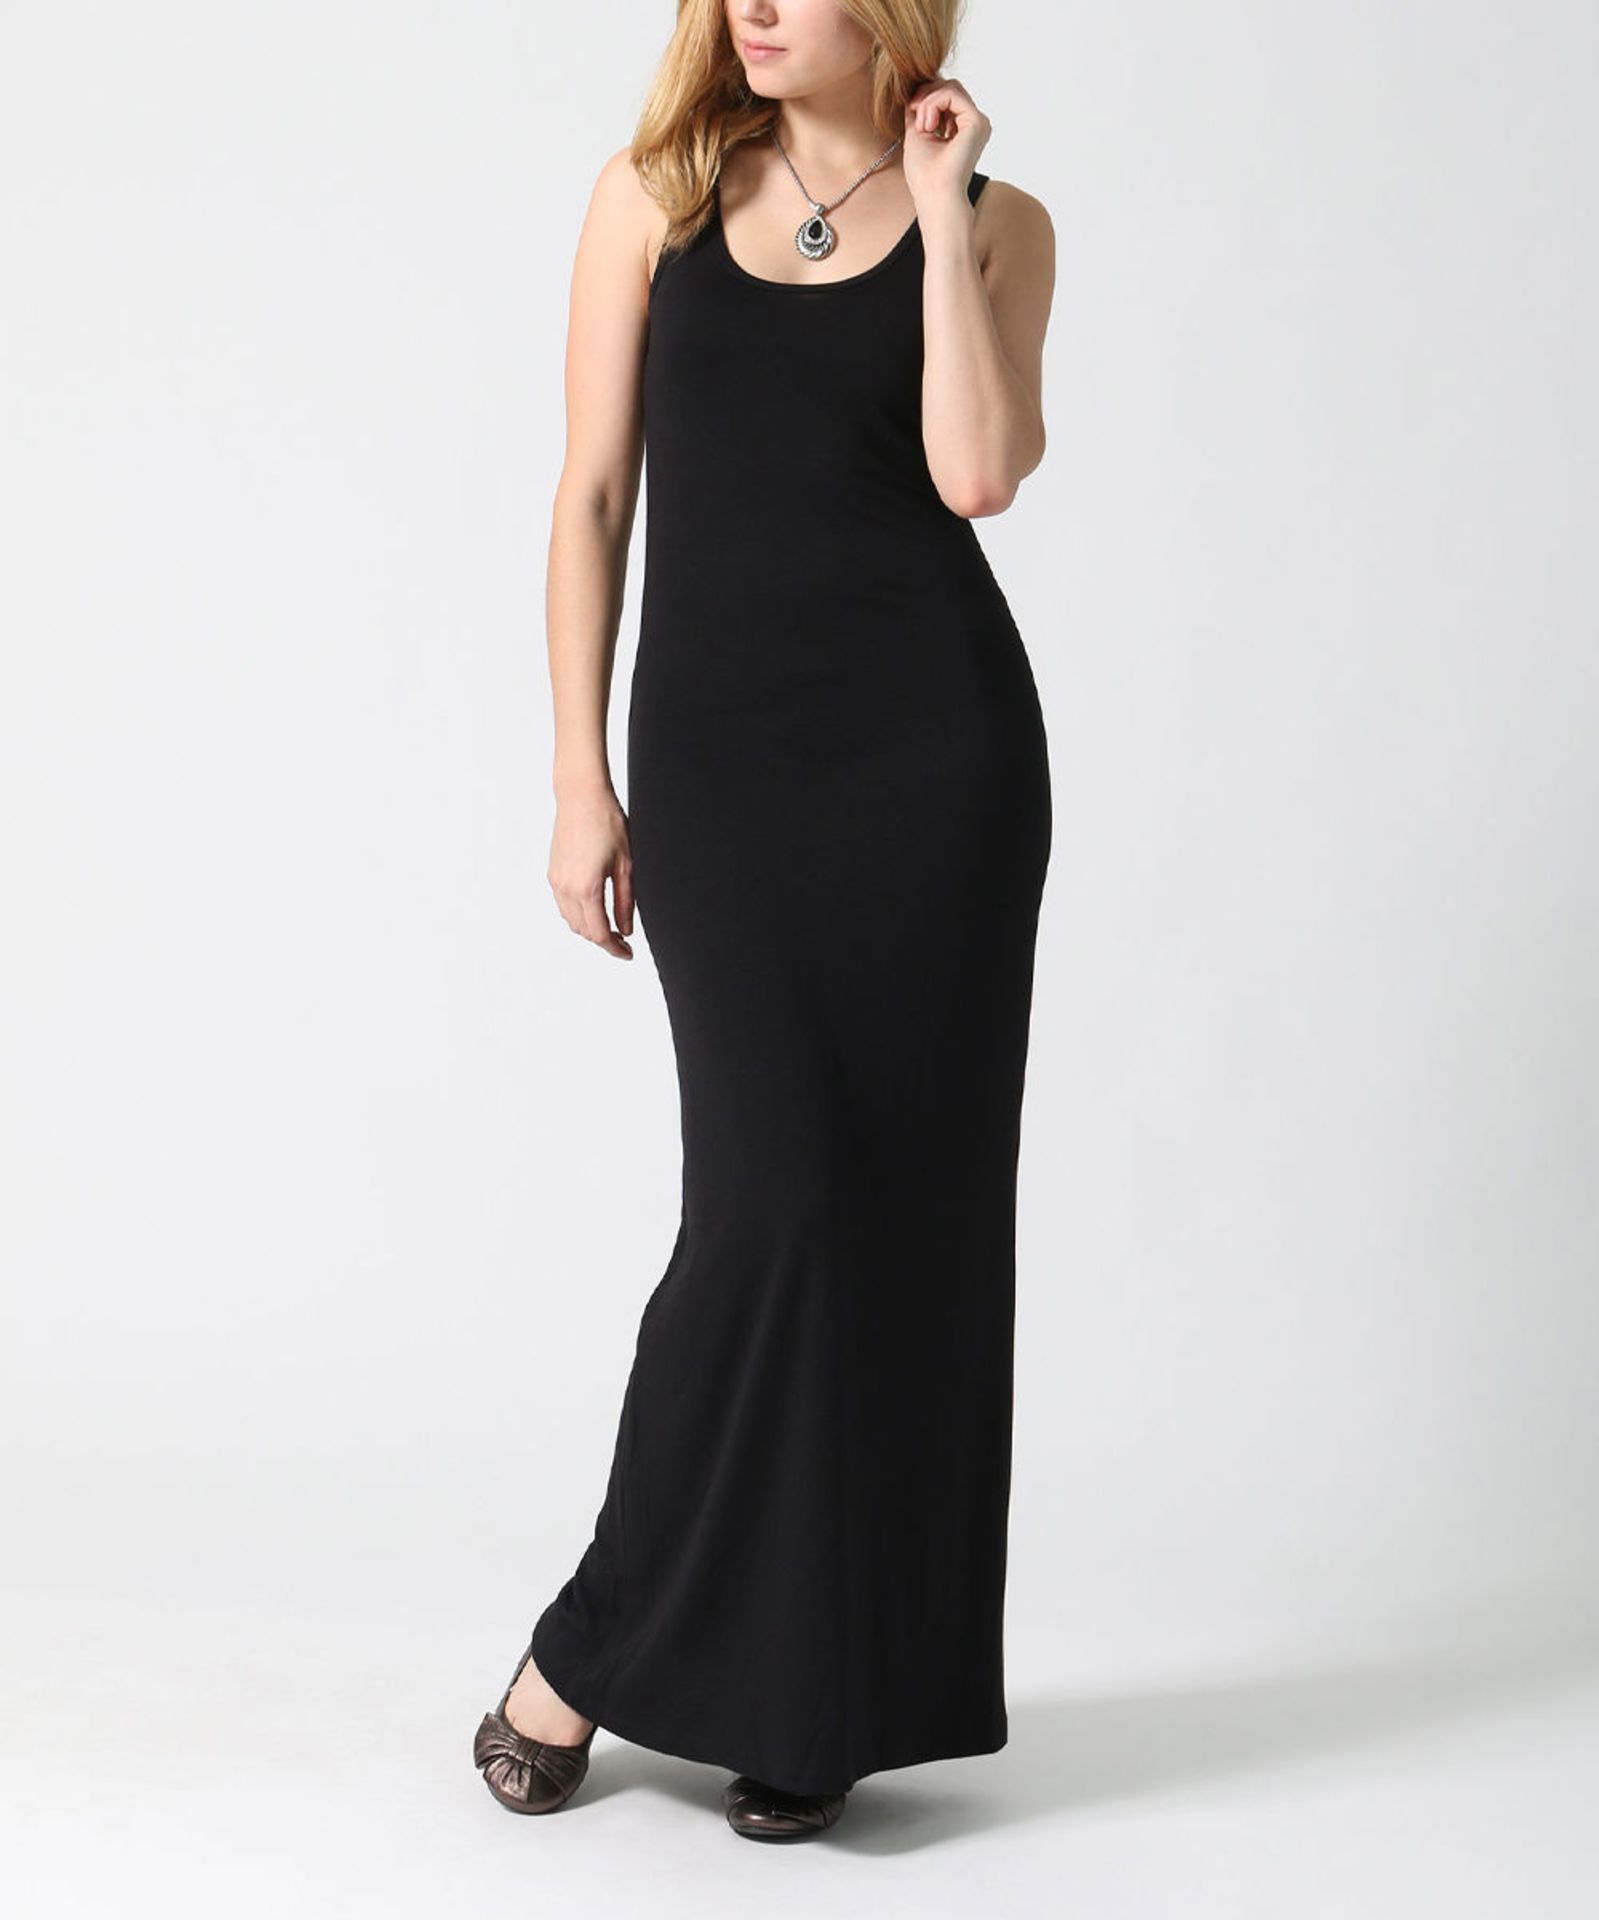 Black Sleeveless Maxi Dress, US Size Medium/UK Size 12 (New with tags) [Ref: 45248598- T-9]